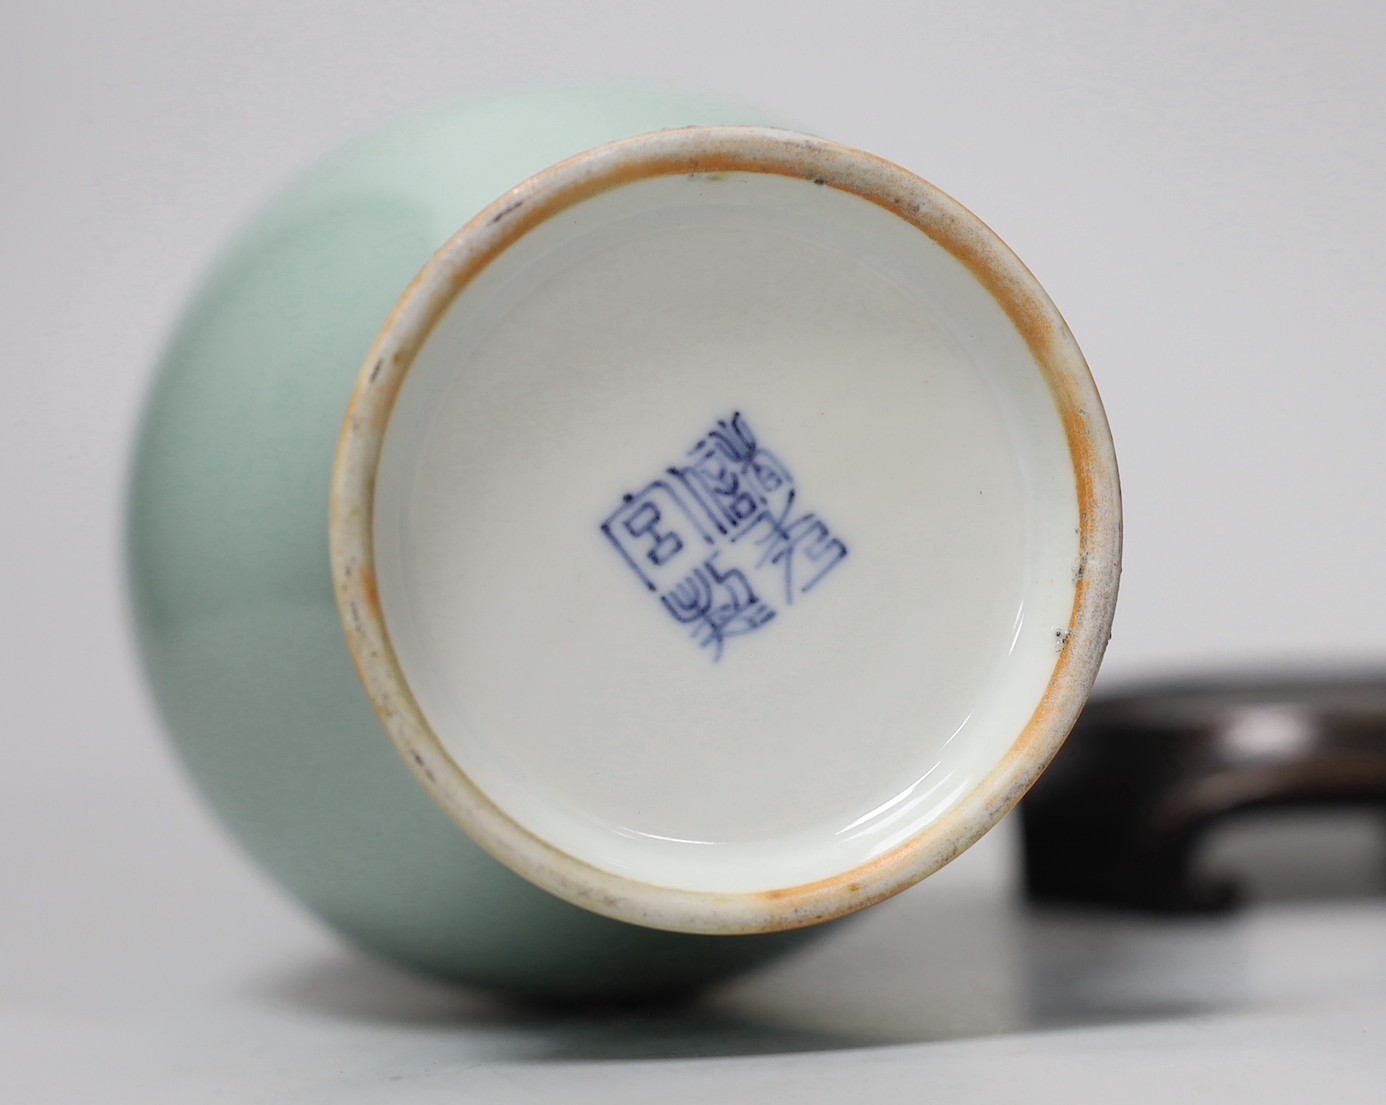 A Chinese celadon glazed vase, hallmark to base, wood stand. 24.5cm high